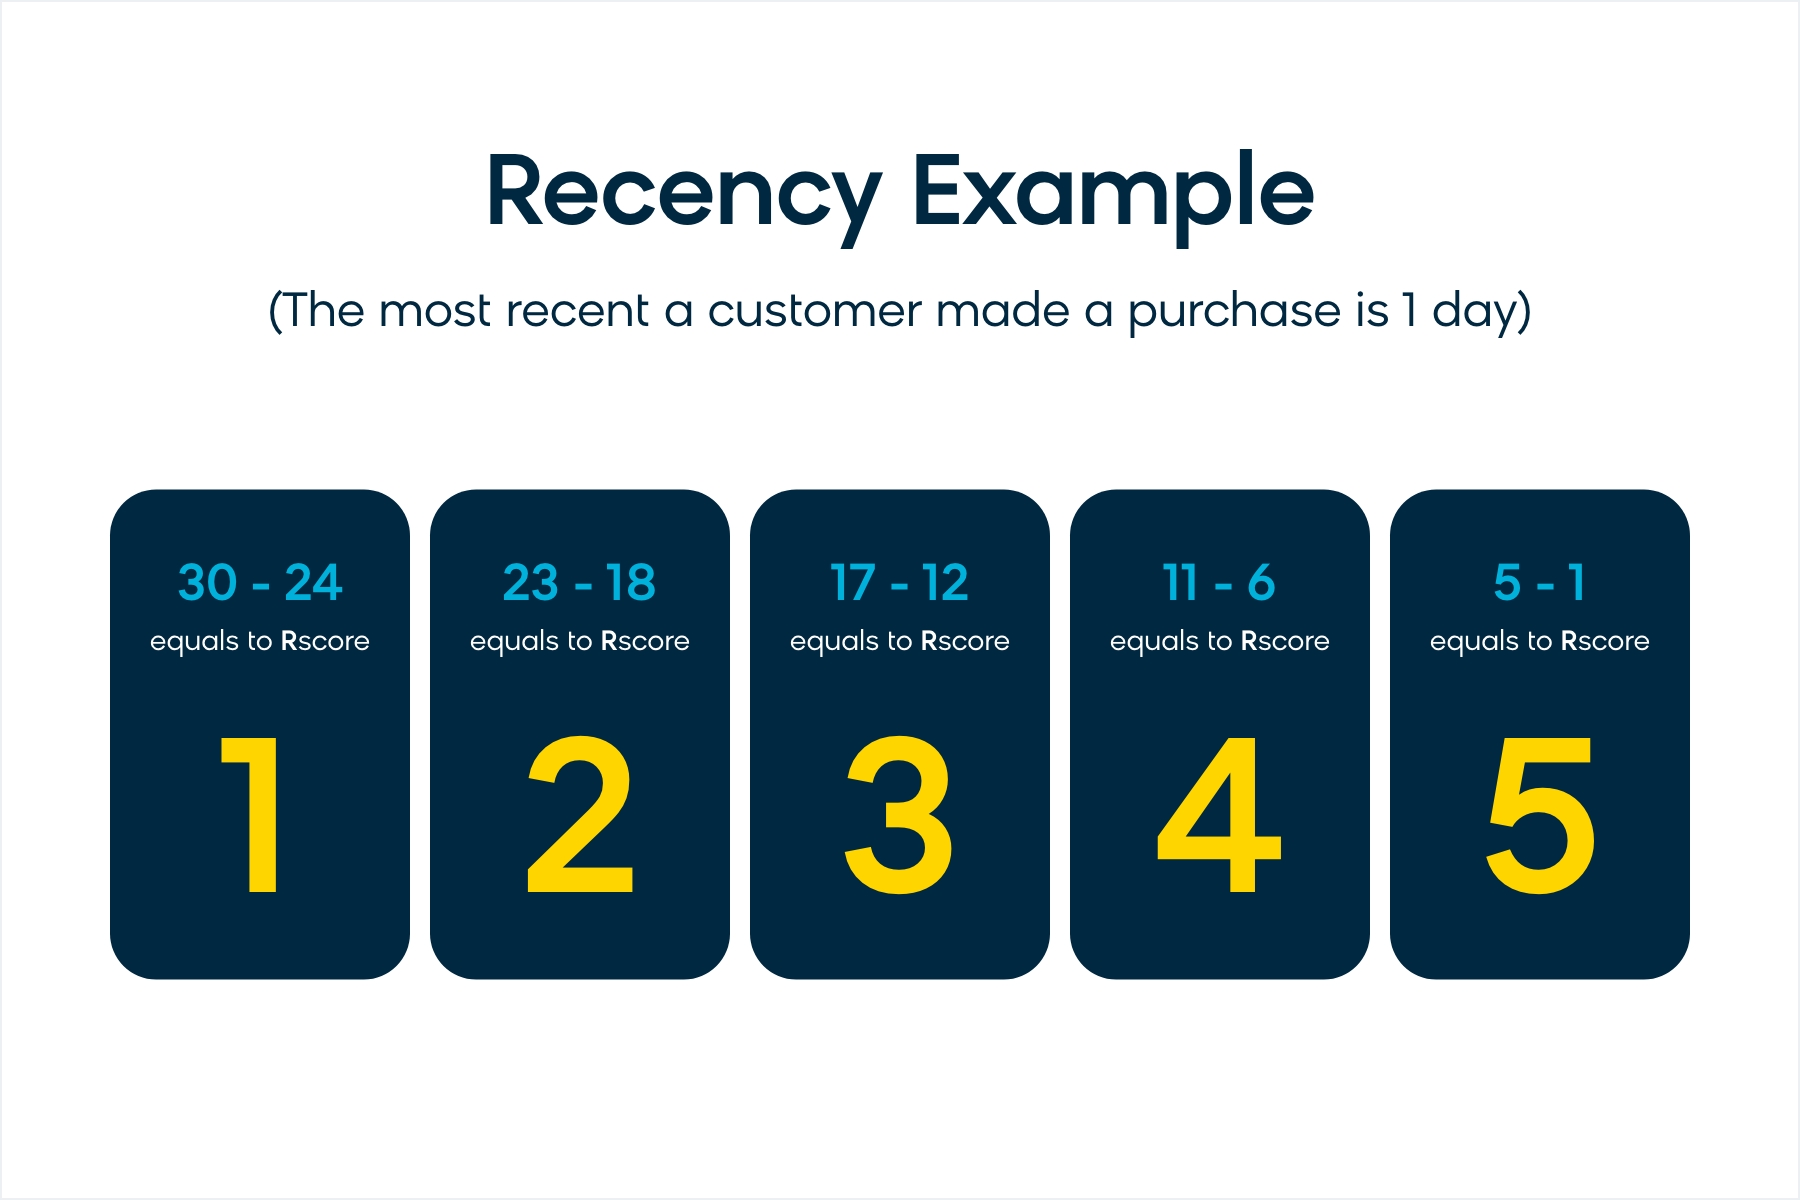 An example of recency scoring in RFM customer segmentation analysis